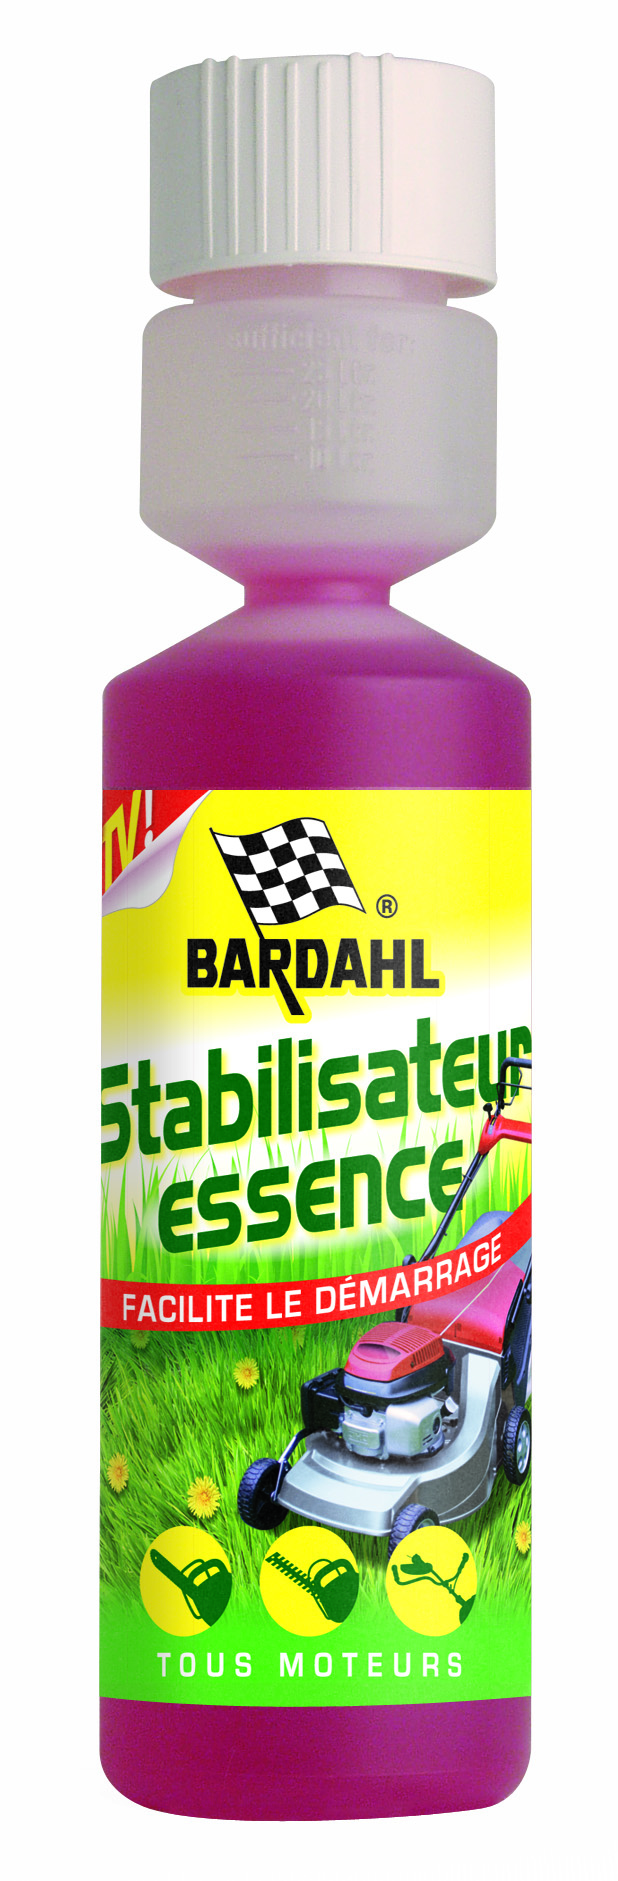 Stabilisateur essence 24 mois 250ml - BARDAHL